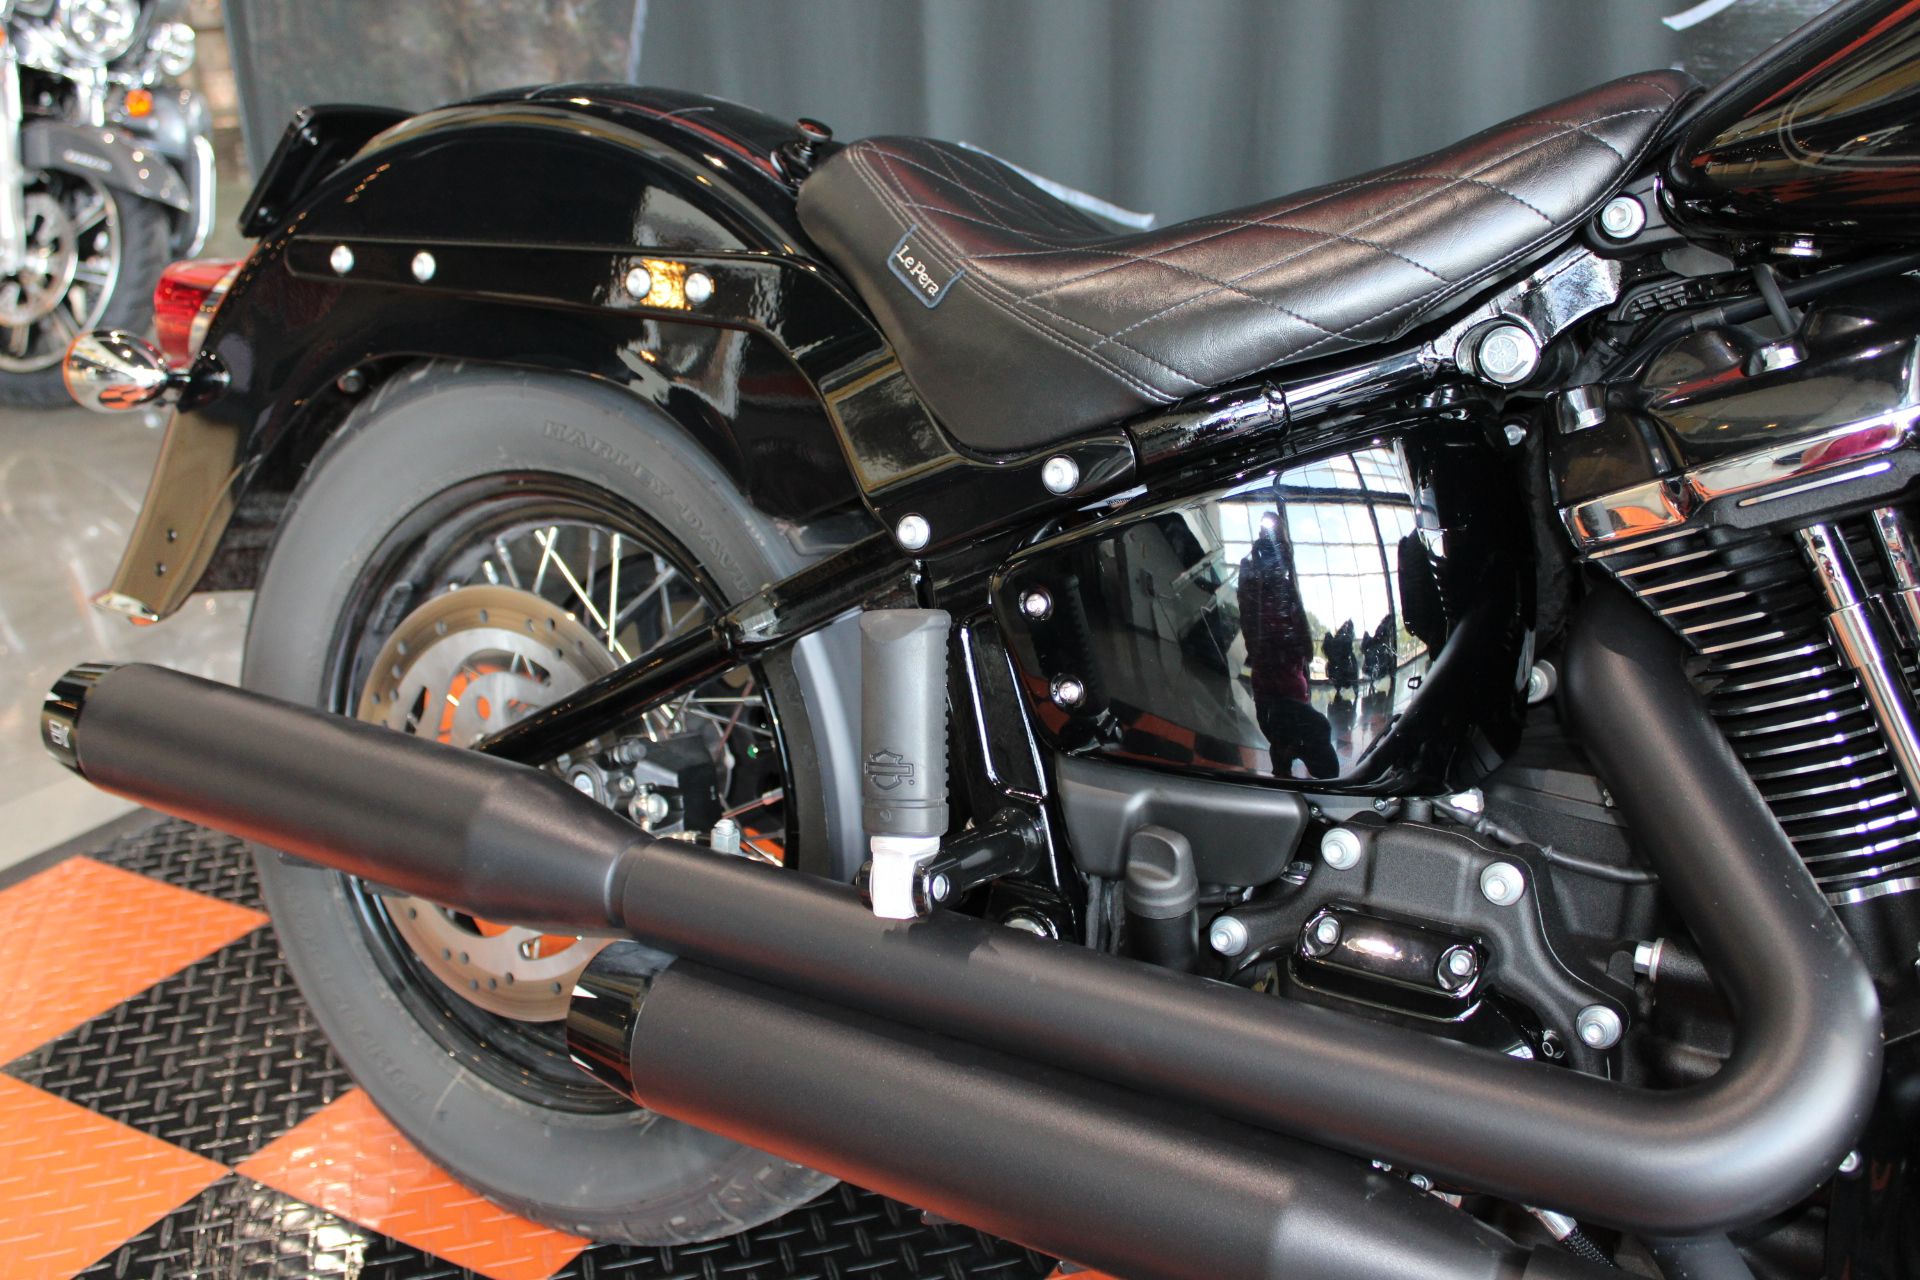 2021 Harley-Davidson Heritage Classic 114 in Shorewood, Illinois - Photo 6